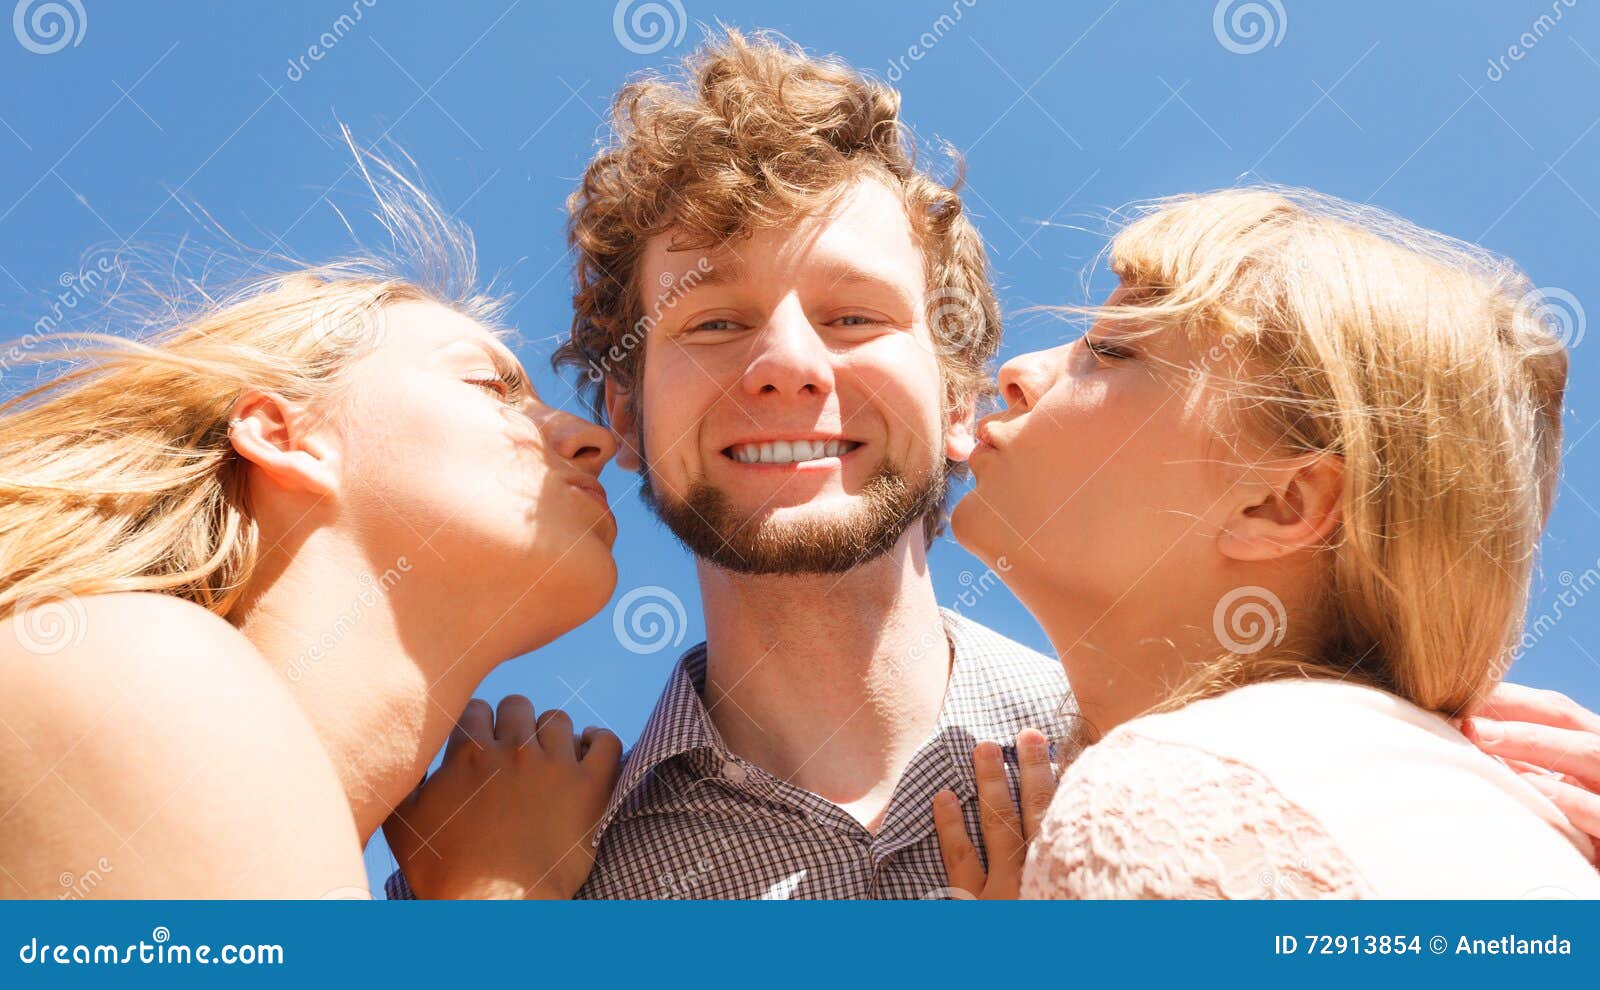 2 girls kissing 1 guy xxx tube picture